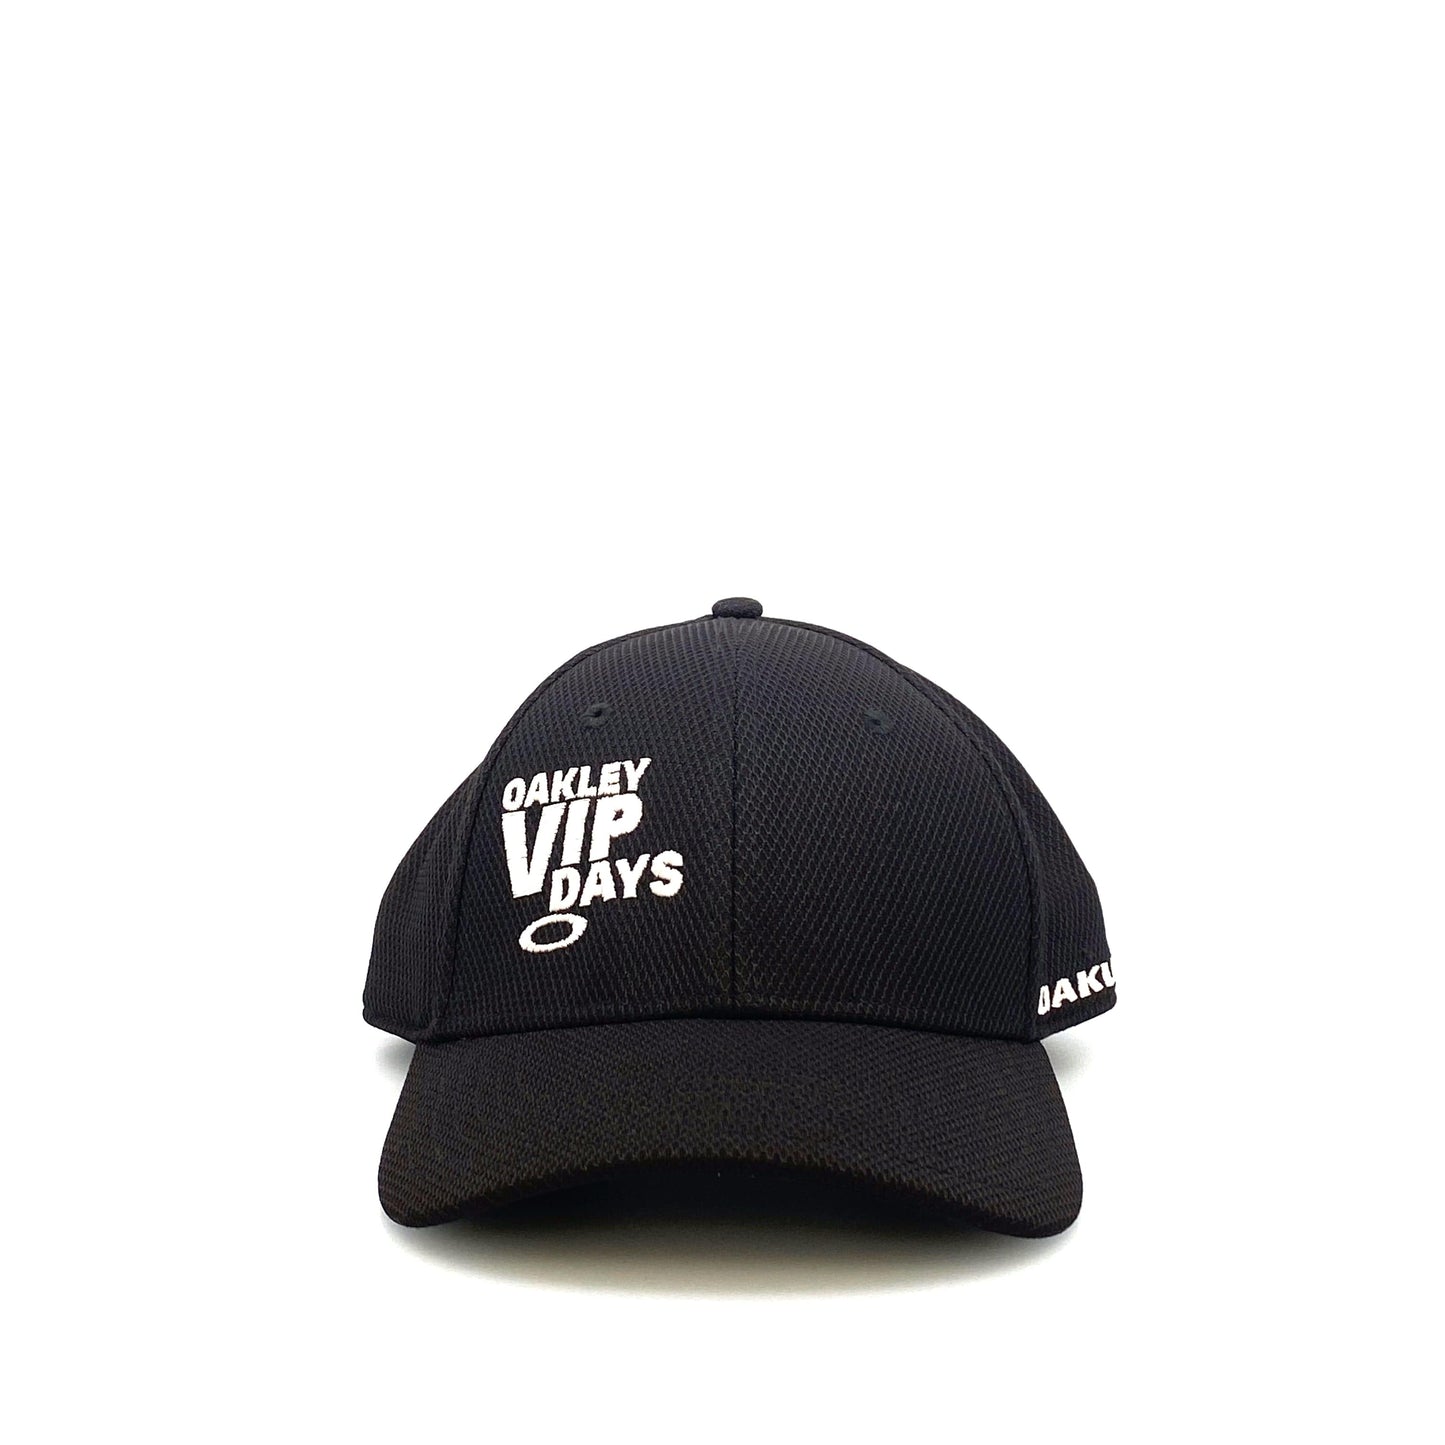 Oakley Mens Black Flat Bill Adjustable Baseball Hat “VIP Days” Limited Edition